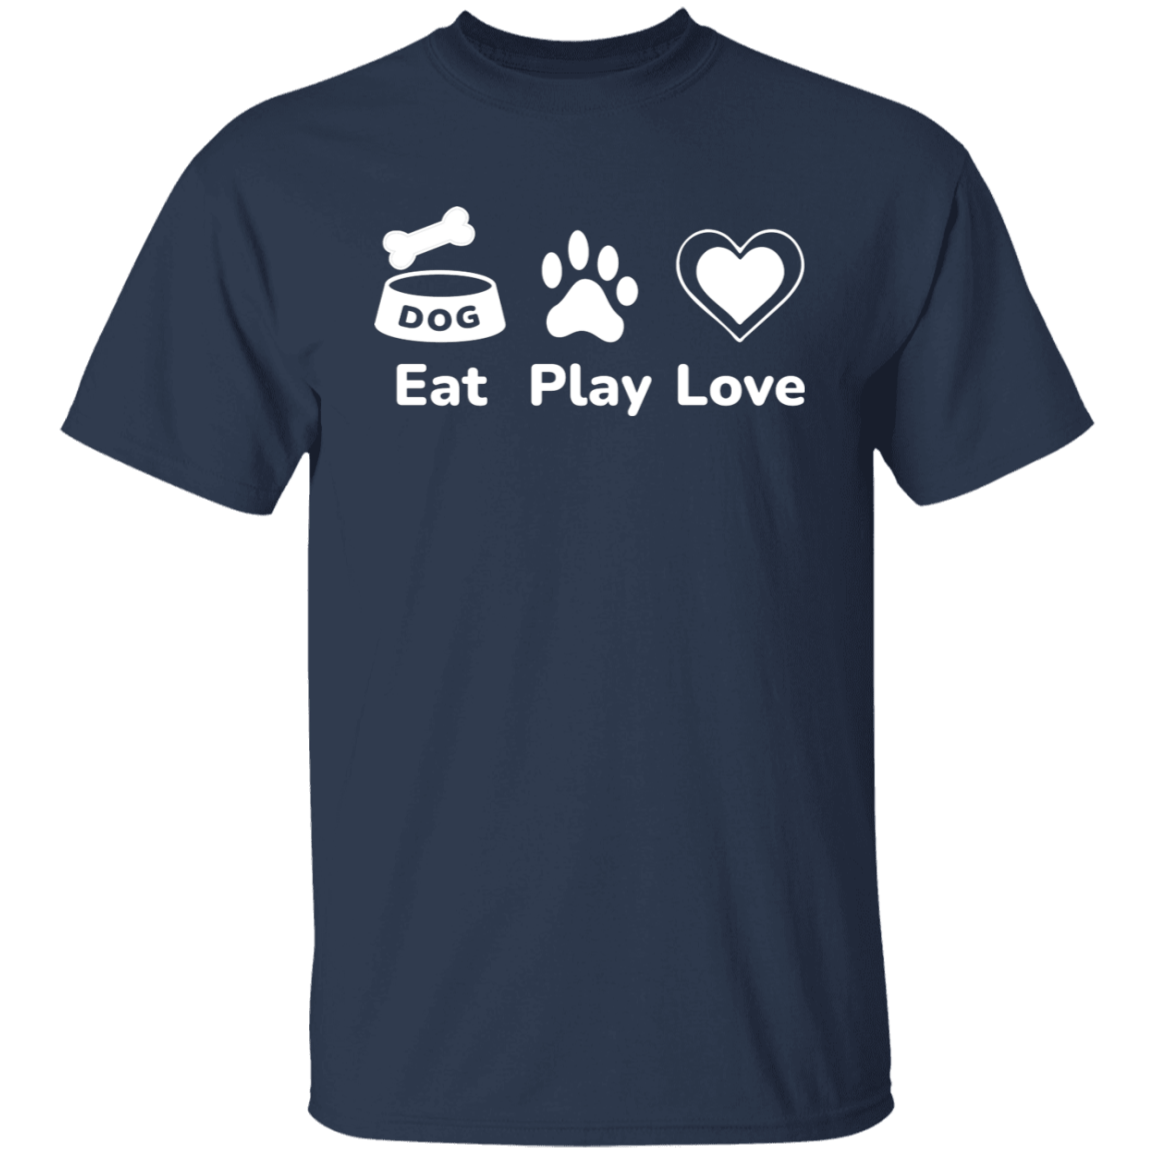 Eat Play Love - T Shirt.